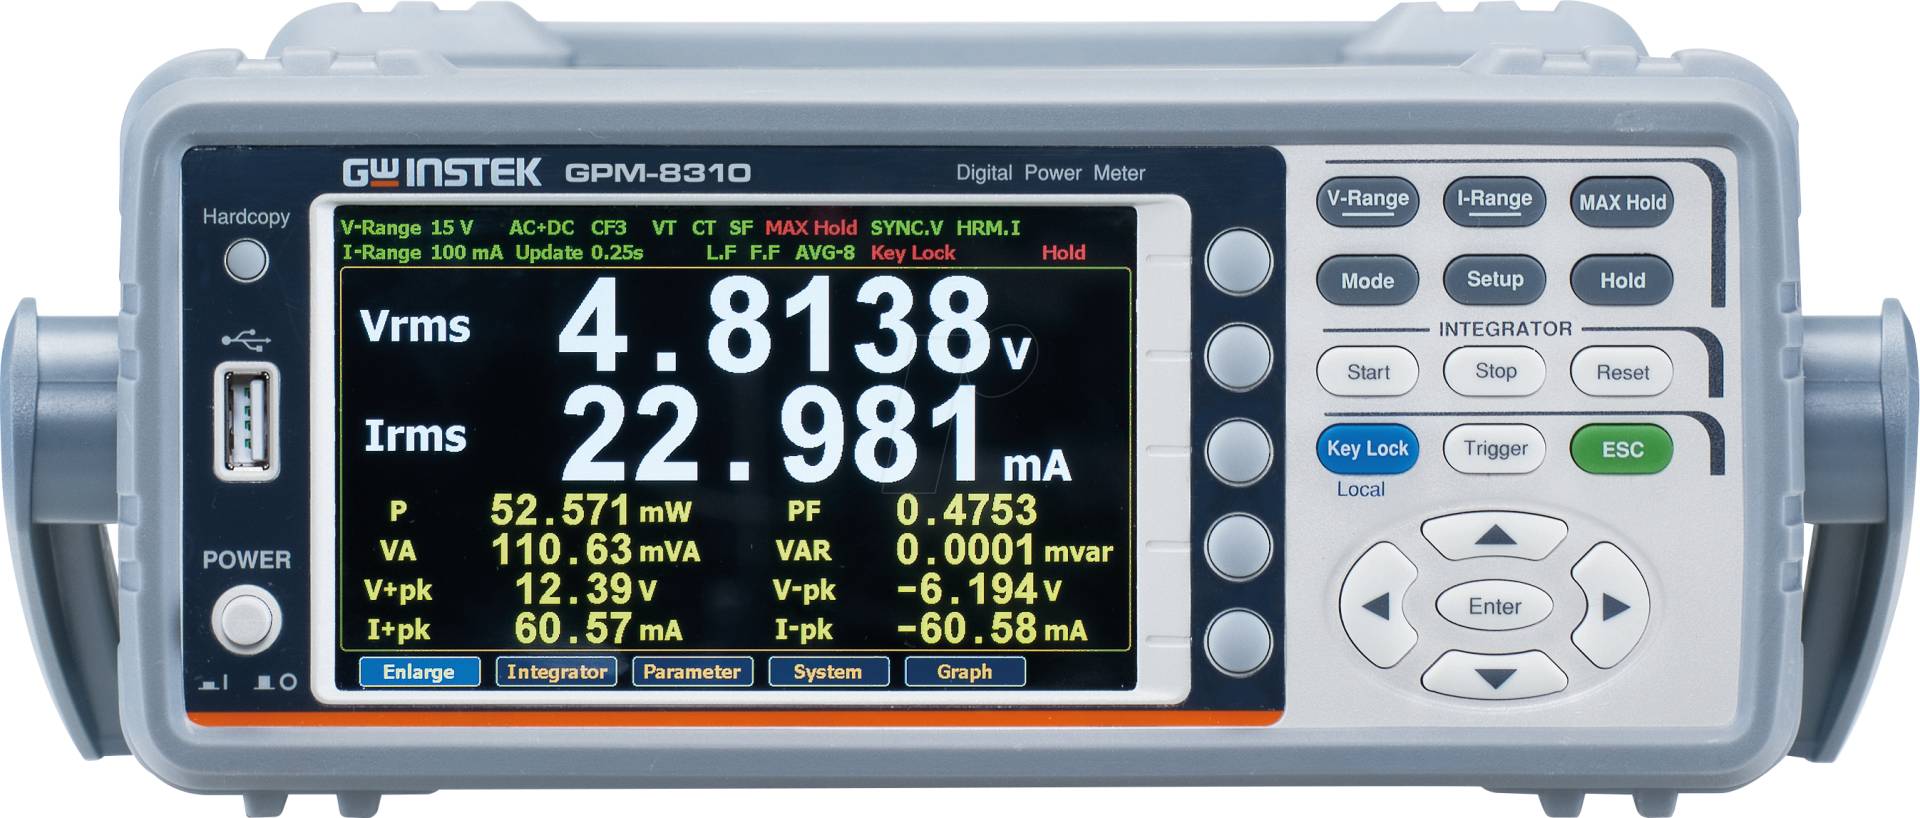 GPM-8310 DA4 - Leistungsmessgerät, digital, USB, LAN, GPIB, Digital I/O von GW-INSTEK